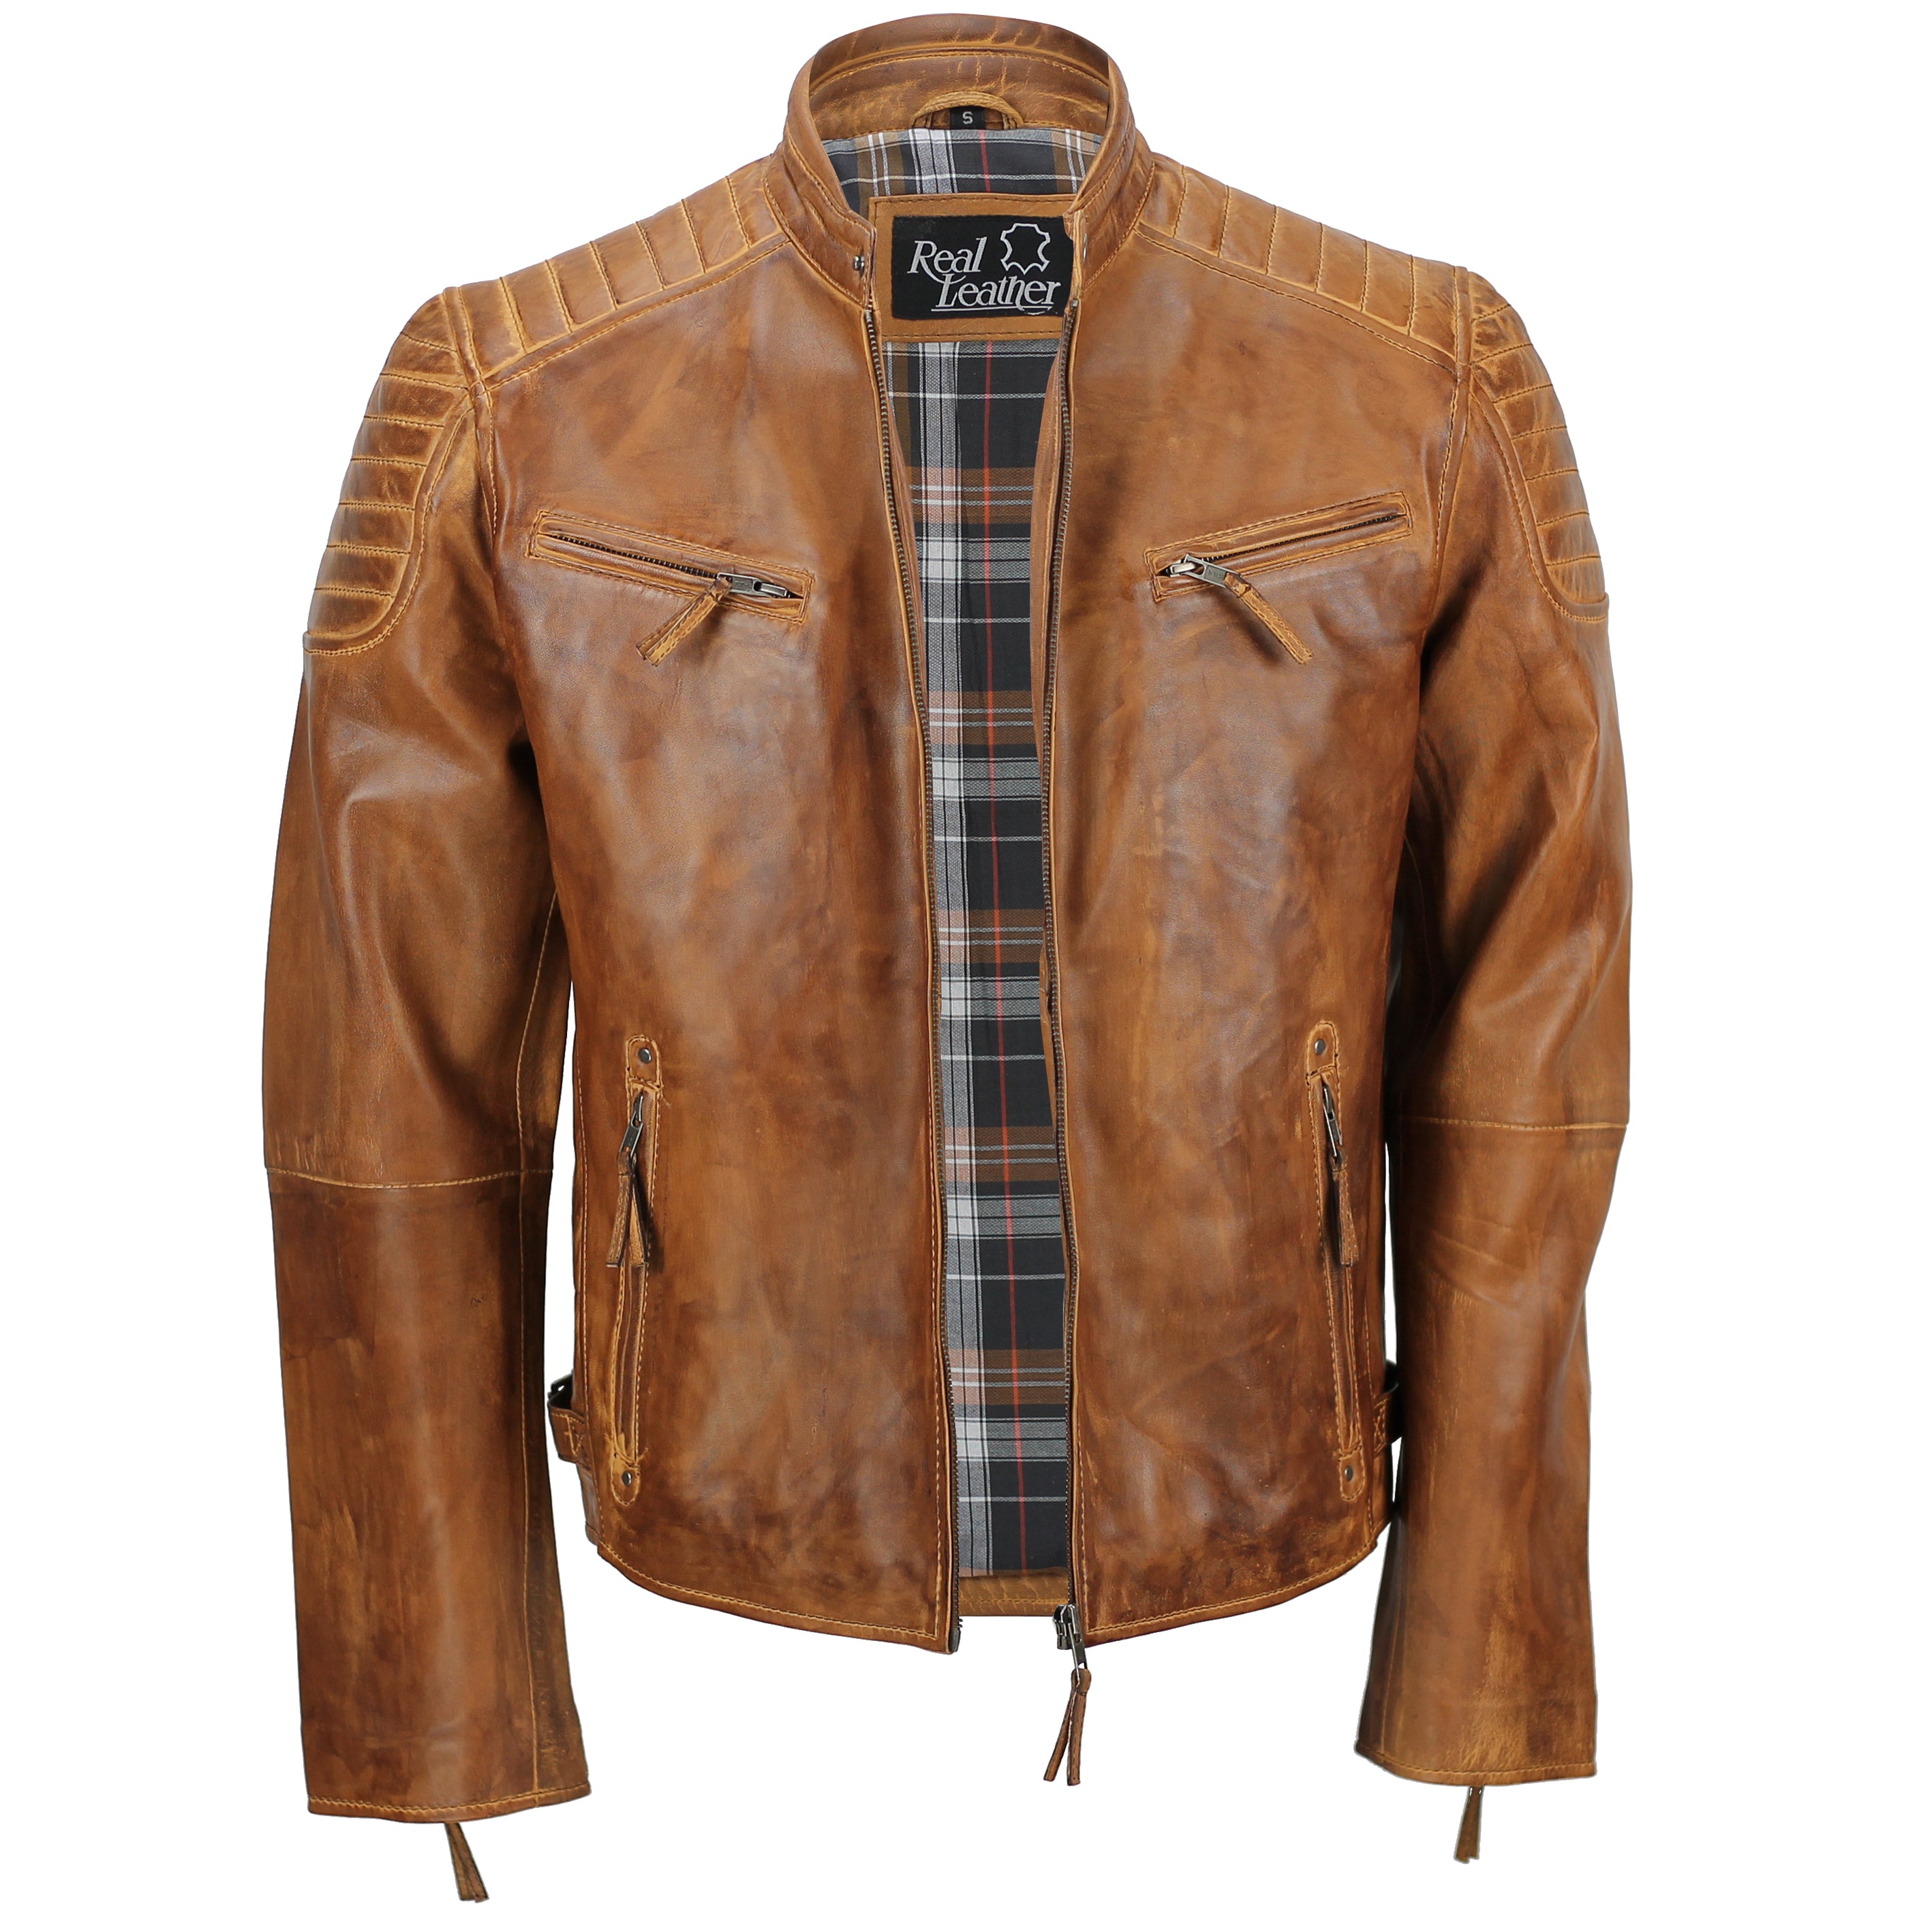 Mens Real Leather Slim Fit Antique Washed Tan Brown Retro Zip Biker Jacket